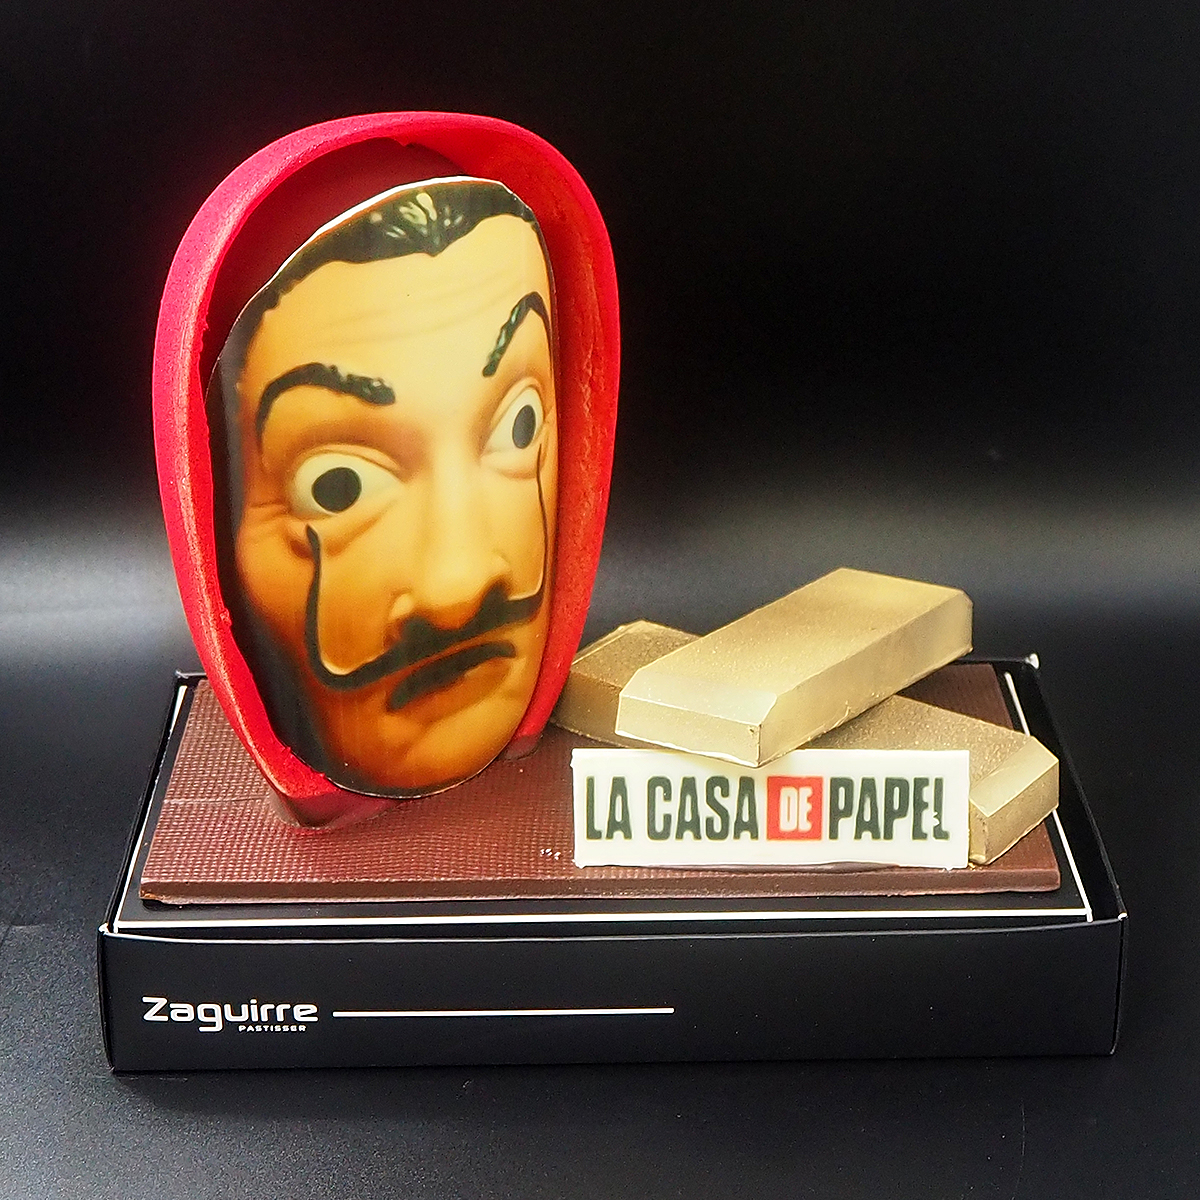 Mona de Pasqua de xocolata de la serie La Casa de Papel elaborada per Zaguirre Pastisser.